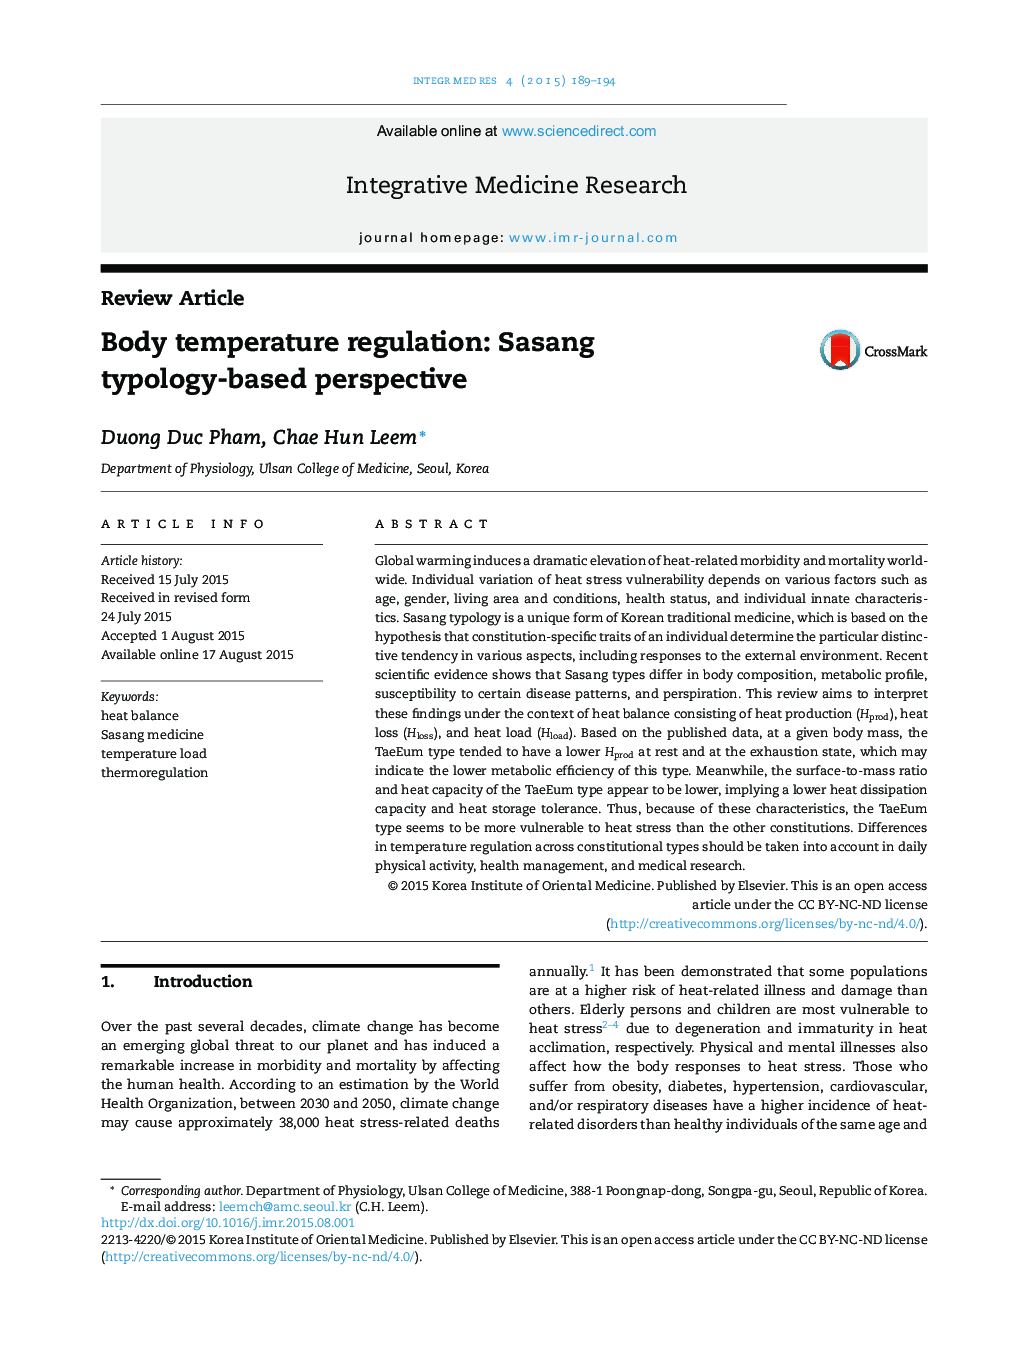 Body temperature regulation: Sasang typology-based perspective